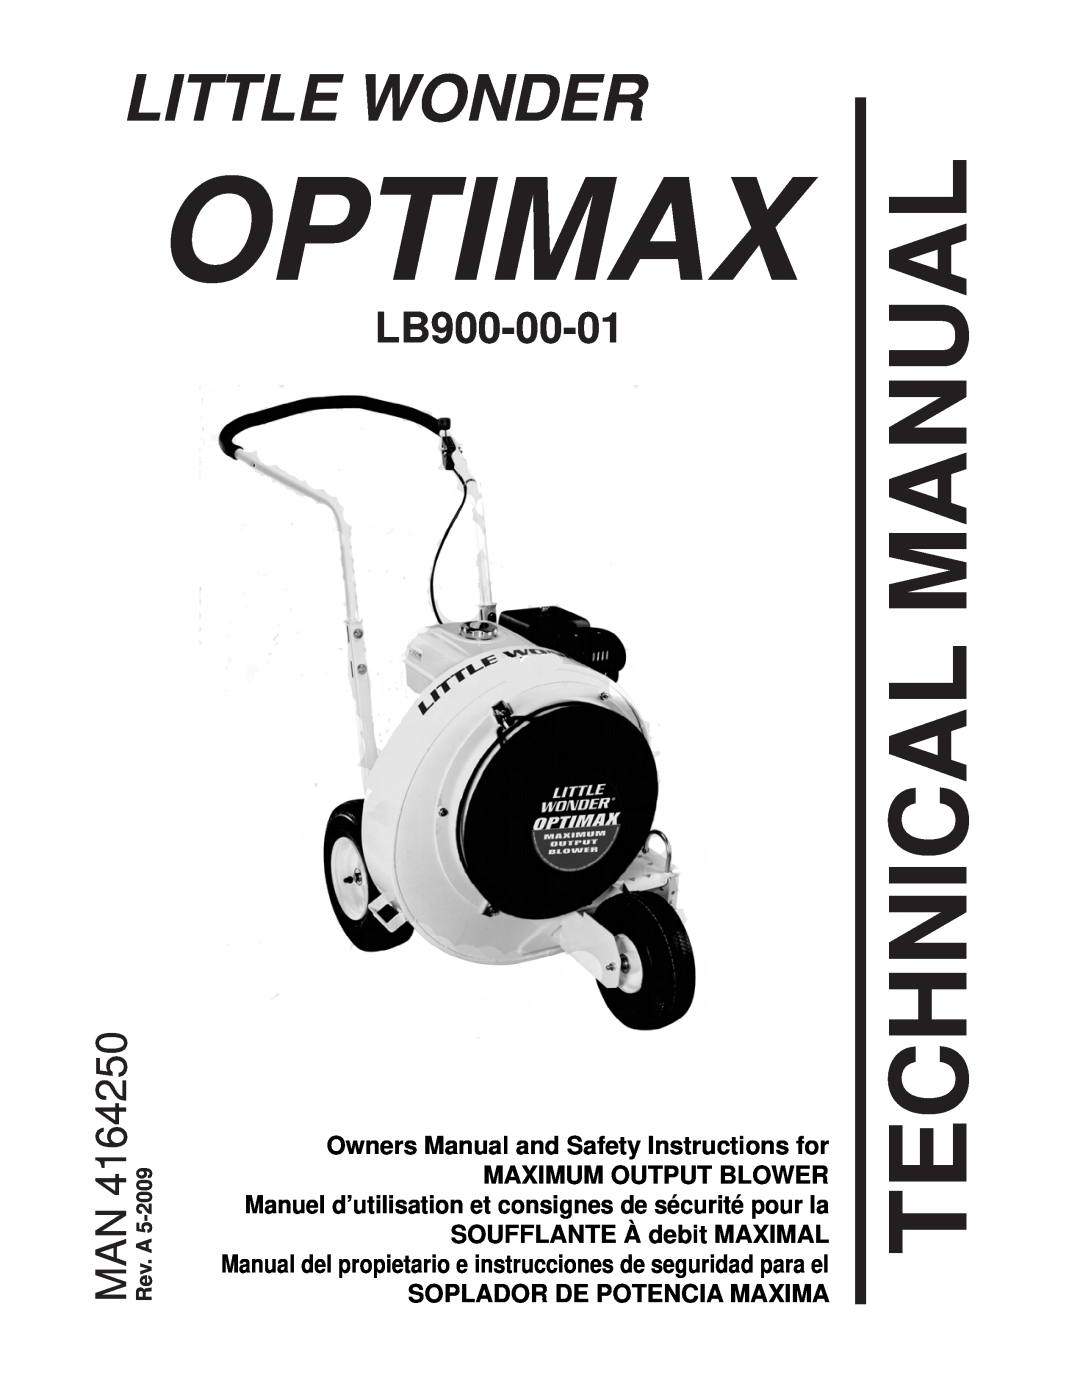 Little Wonder LB900-00-01 technical manual Technical Manual, Little Wonder, Maximum Output Blower, 4164250MAN 2009-5ARev 